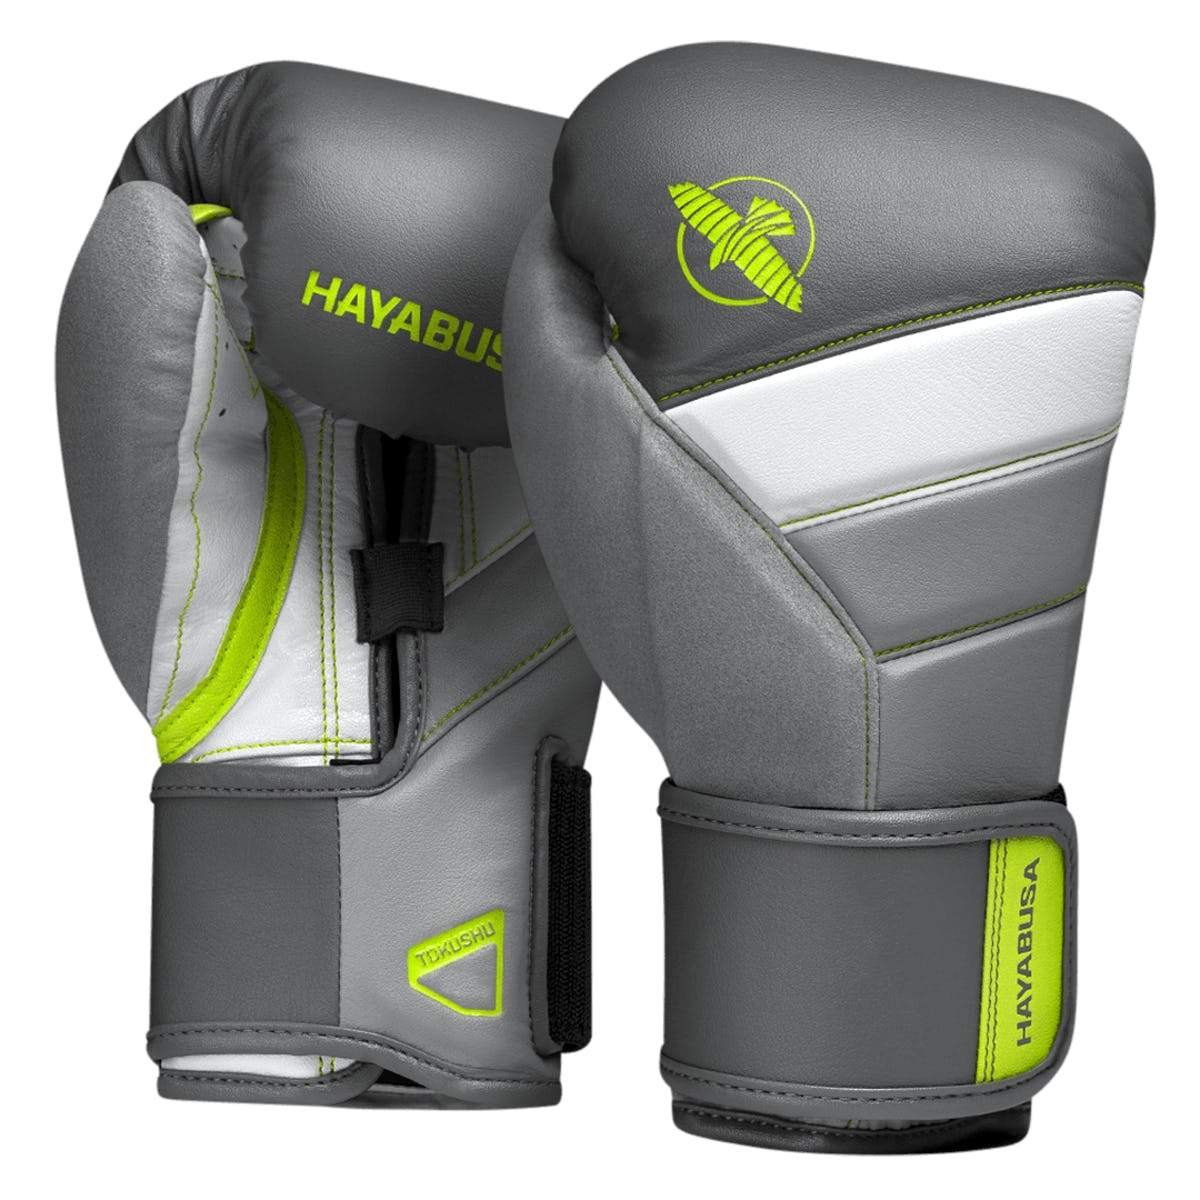 Hayabusa - Hayabusa T3 Boxing Gloves - Mortal Combat Fight Shop